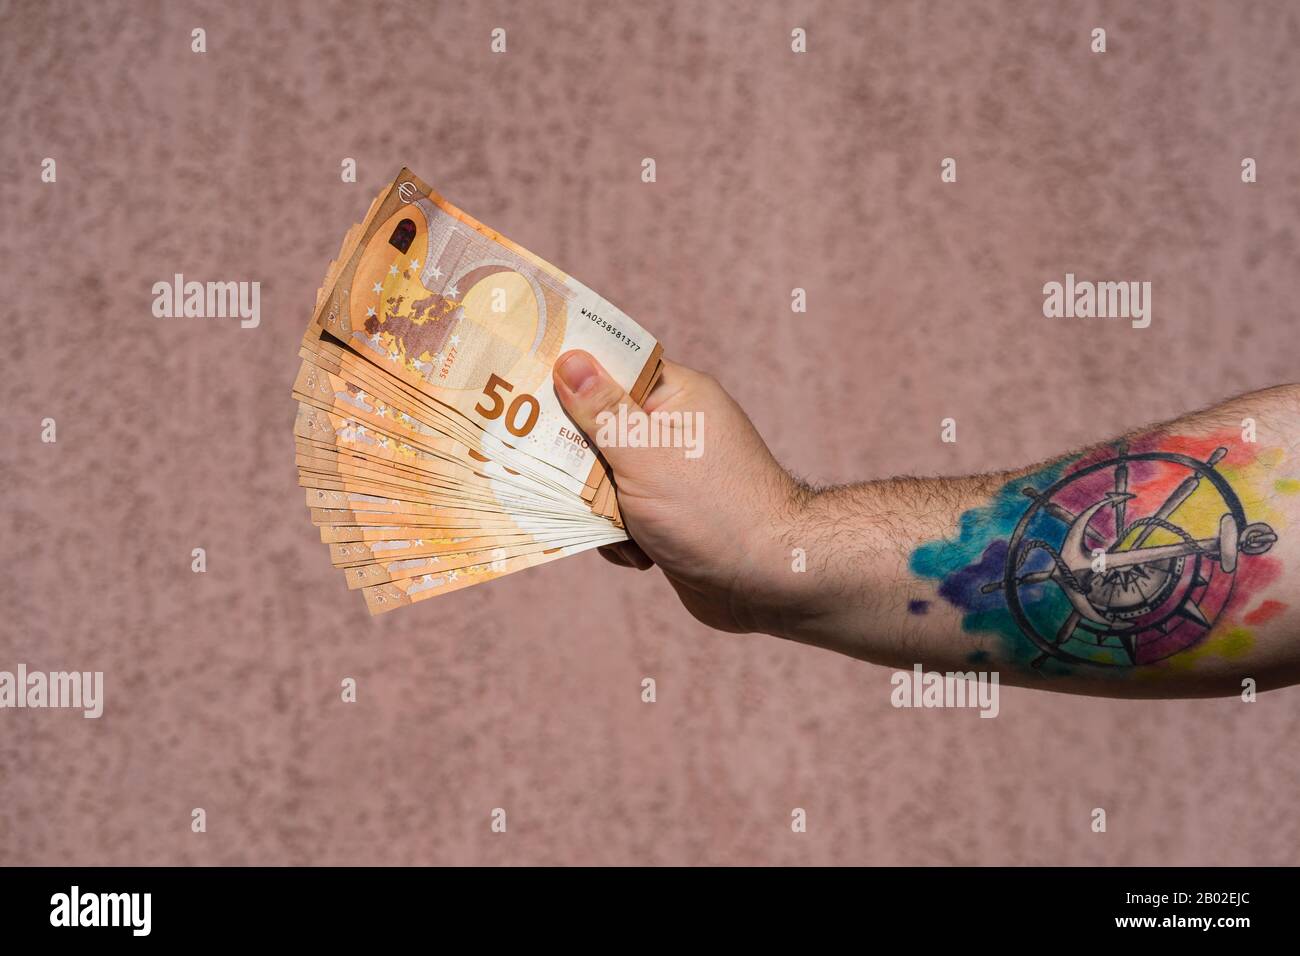 135 Cool Money Tattoos For Men